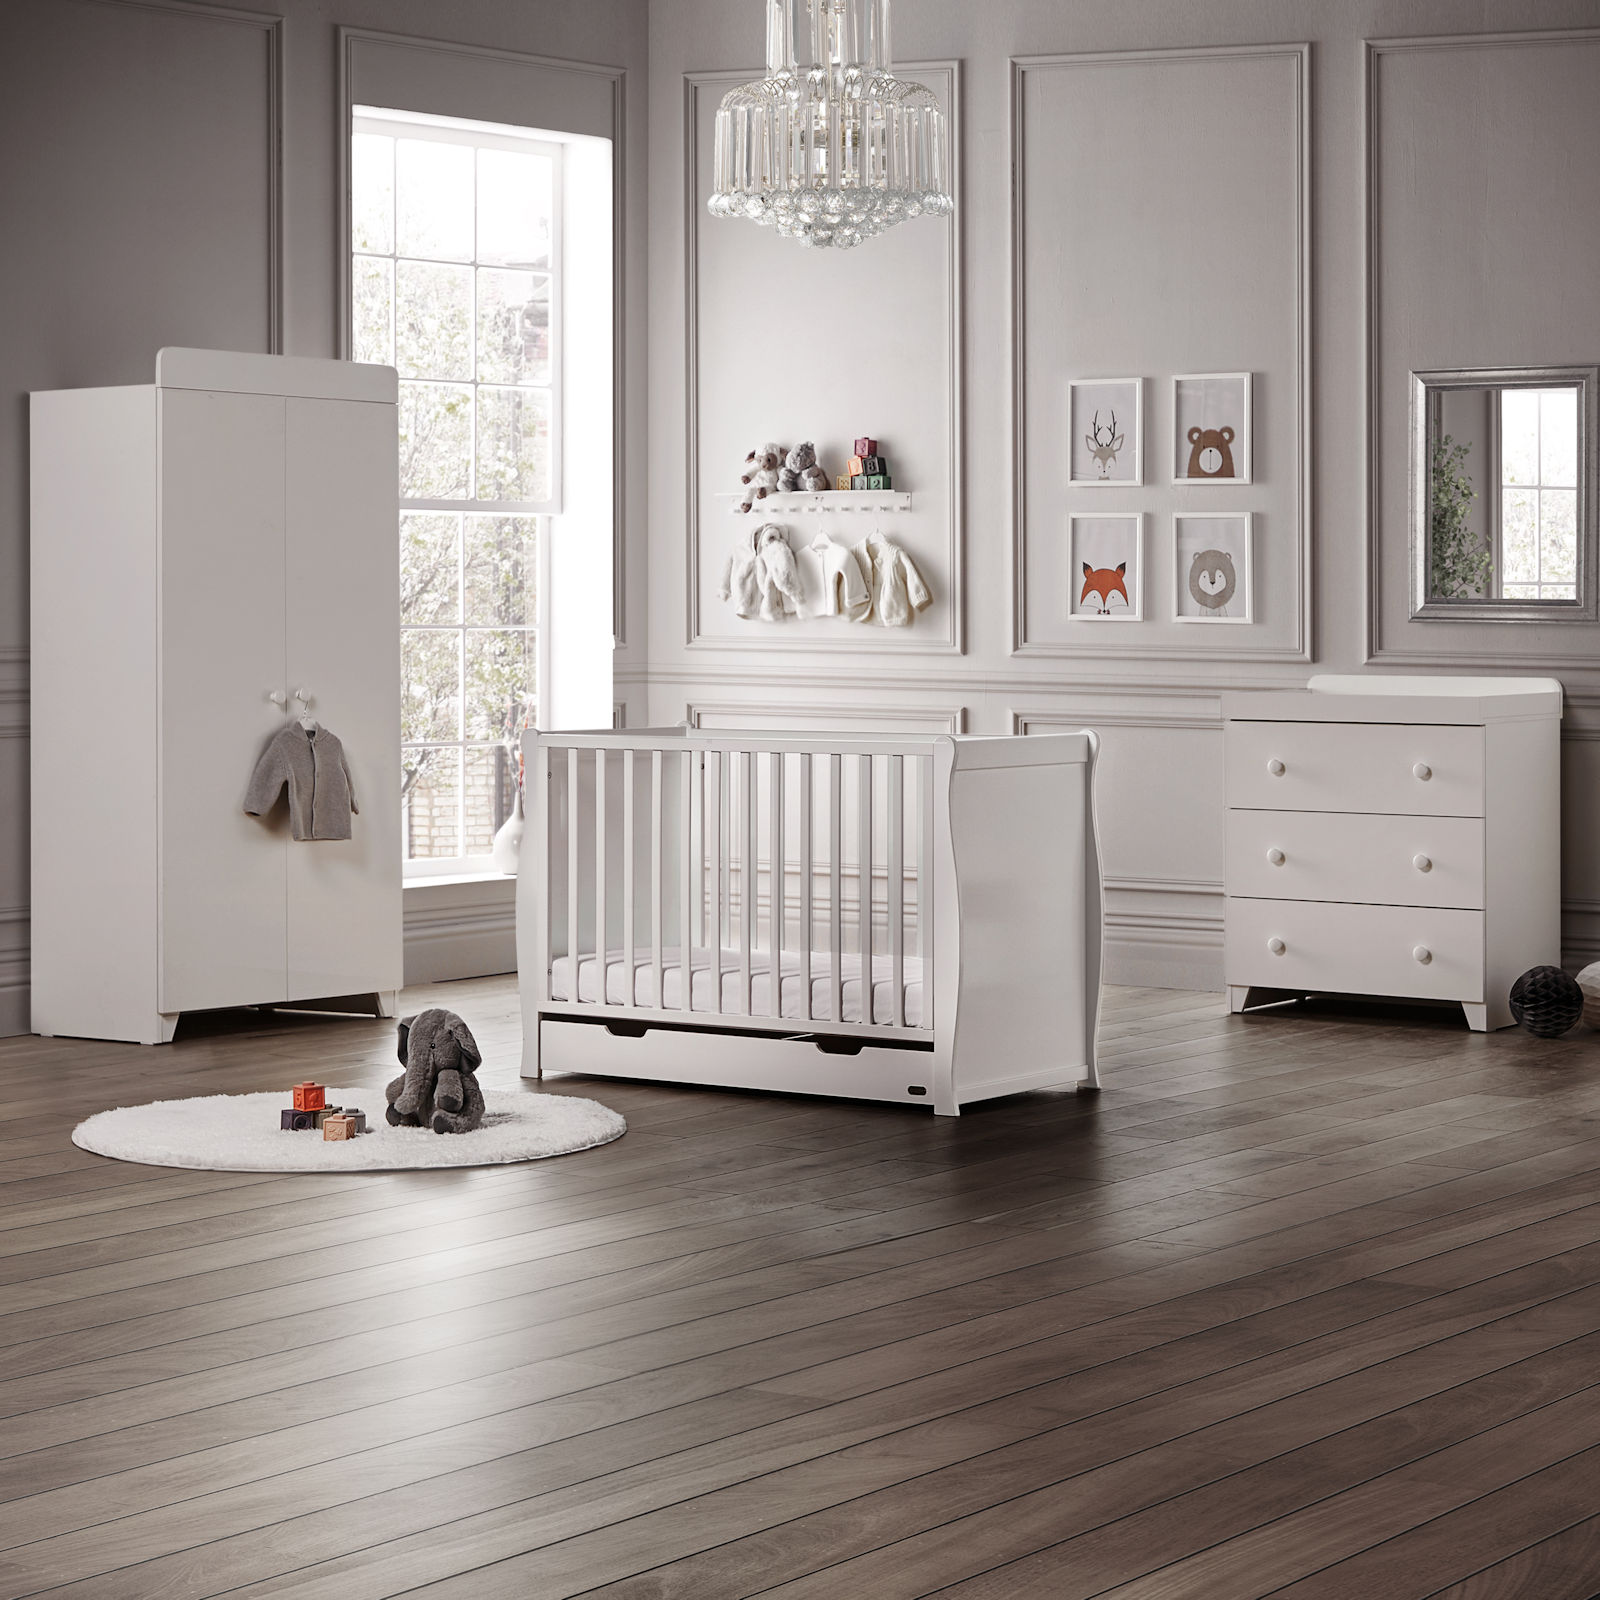 Puggle Sleigh Cot 5 Piece Nursery Furniture Set With Storage Drawer - White